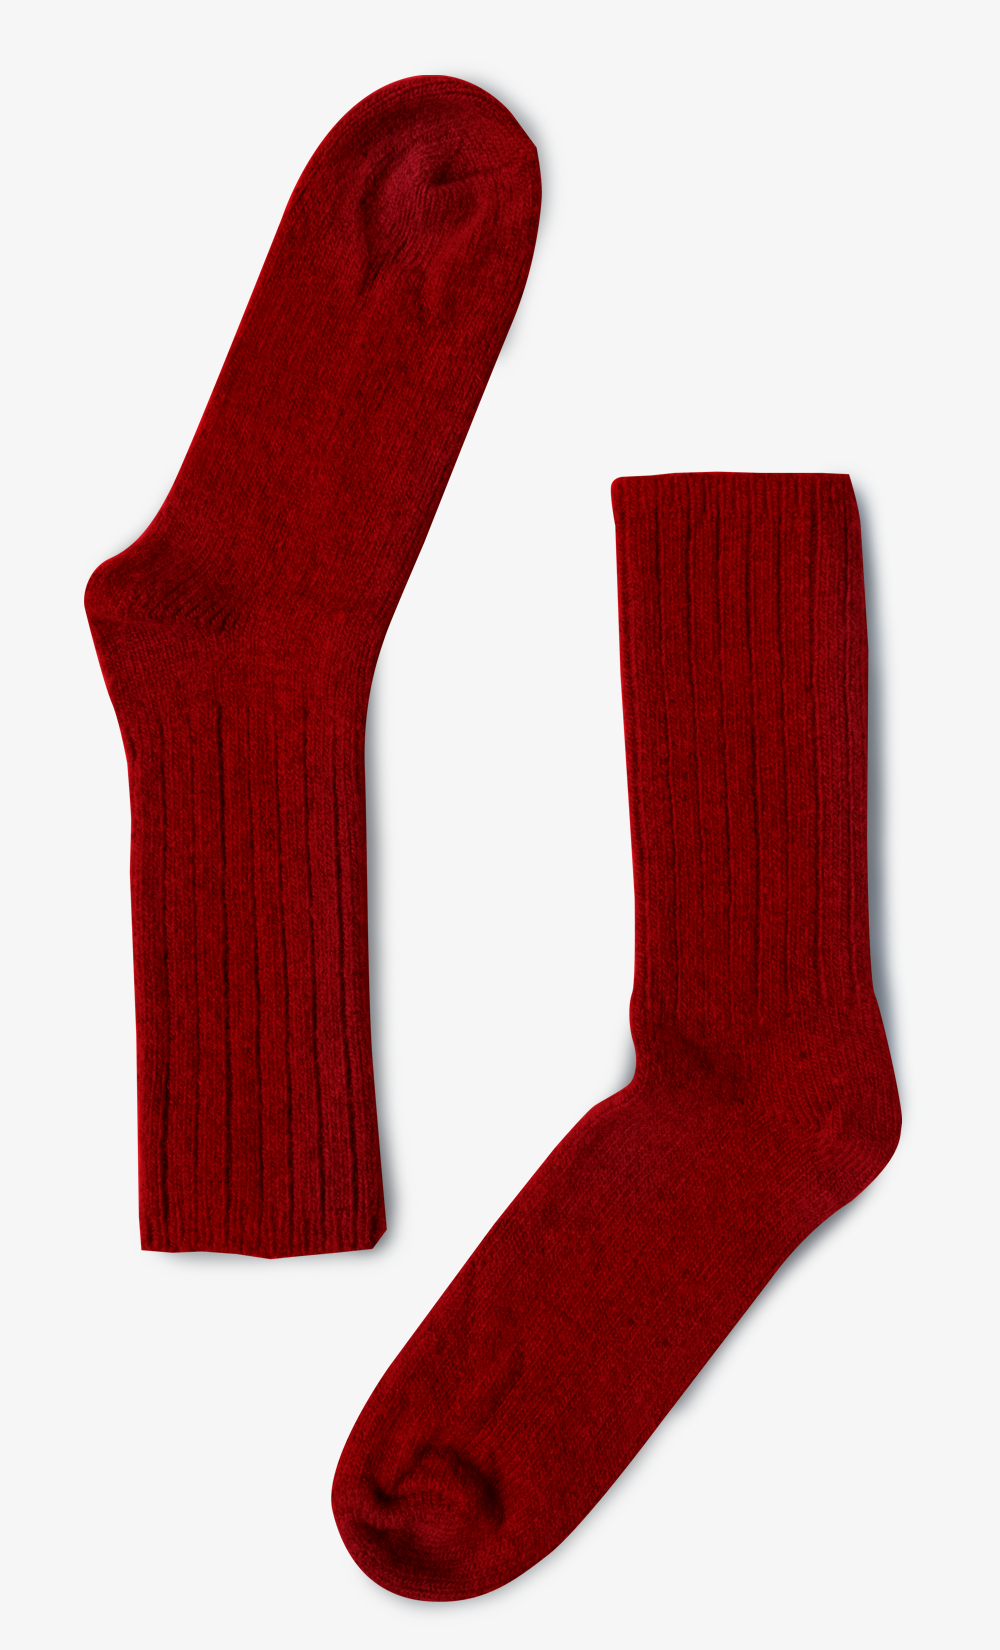 Lamb and Merino wool socks - Red